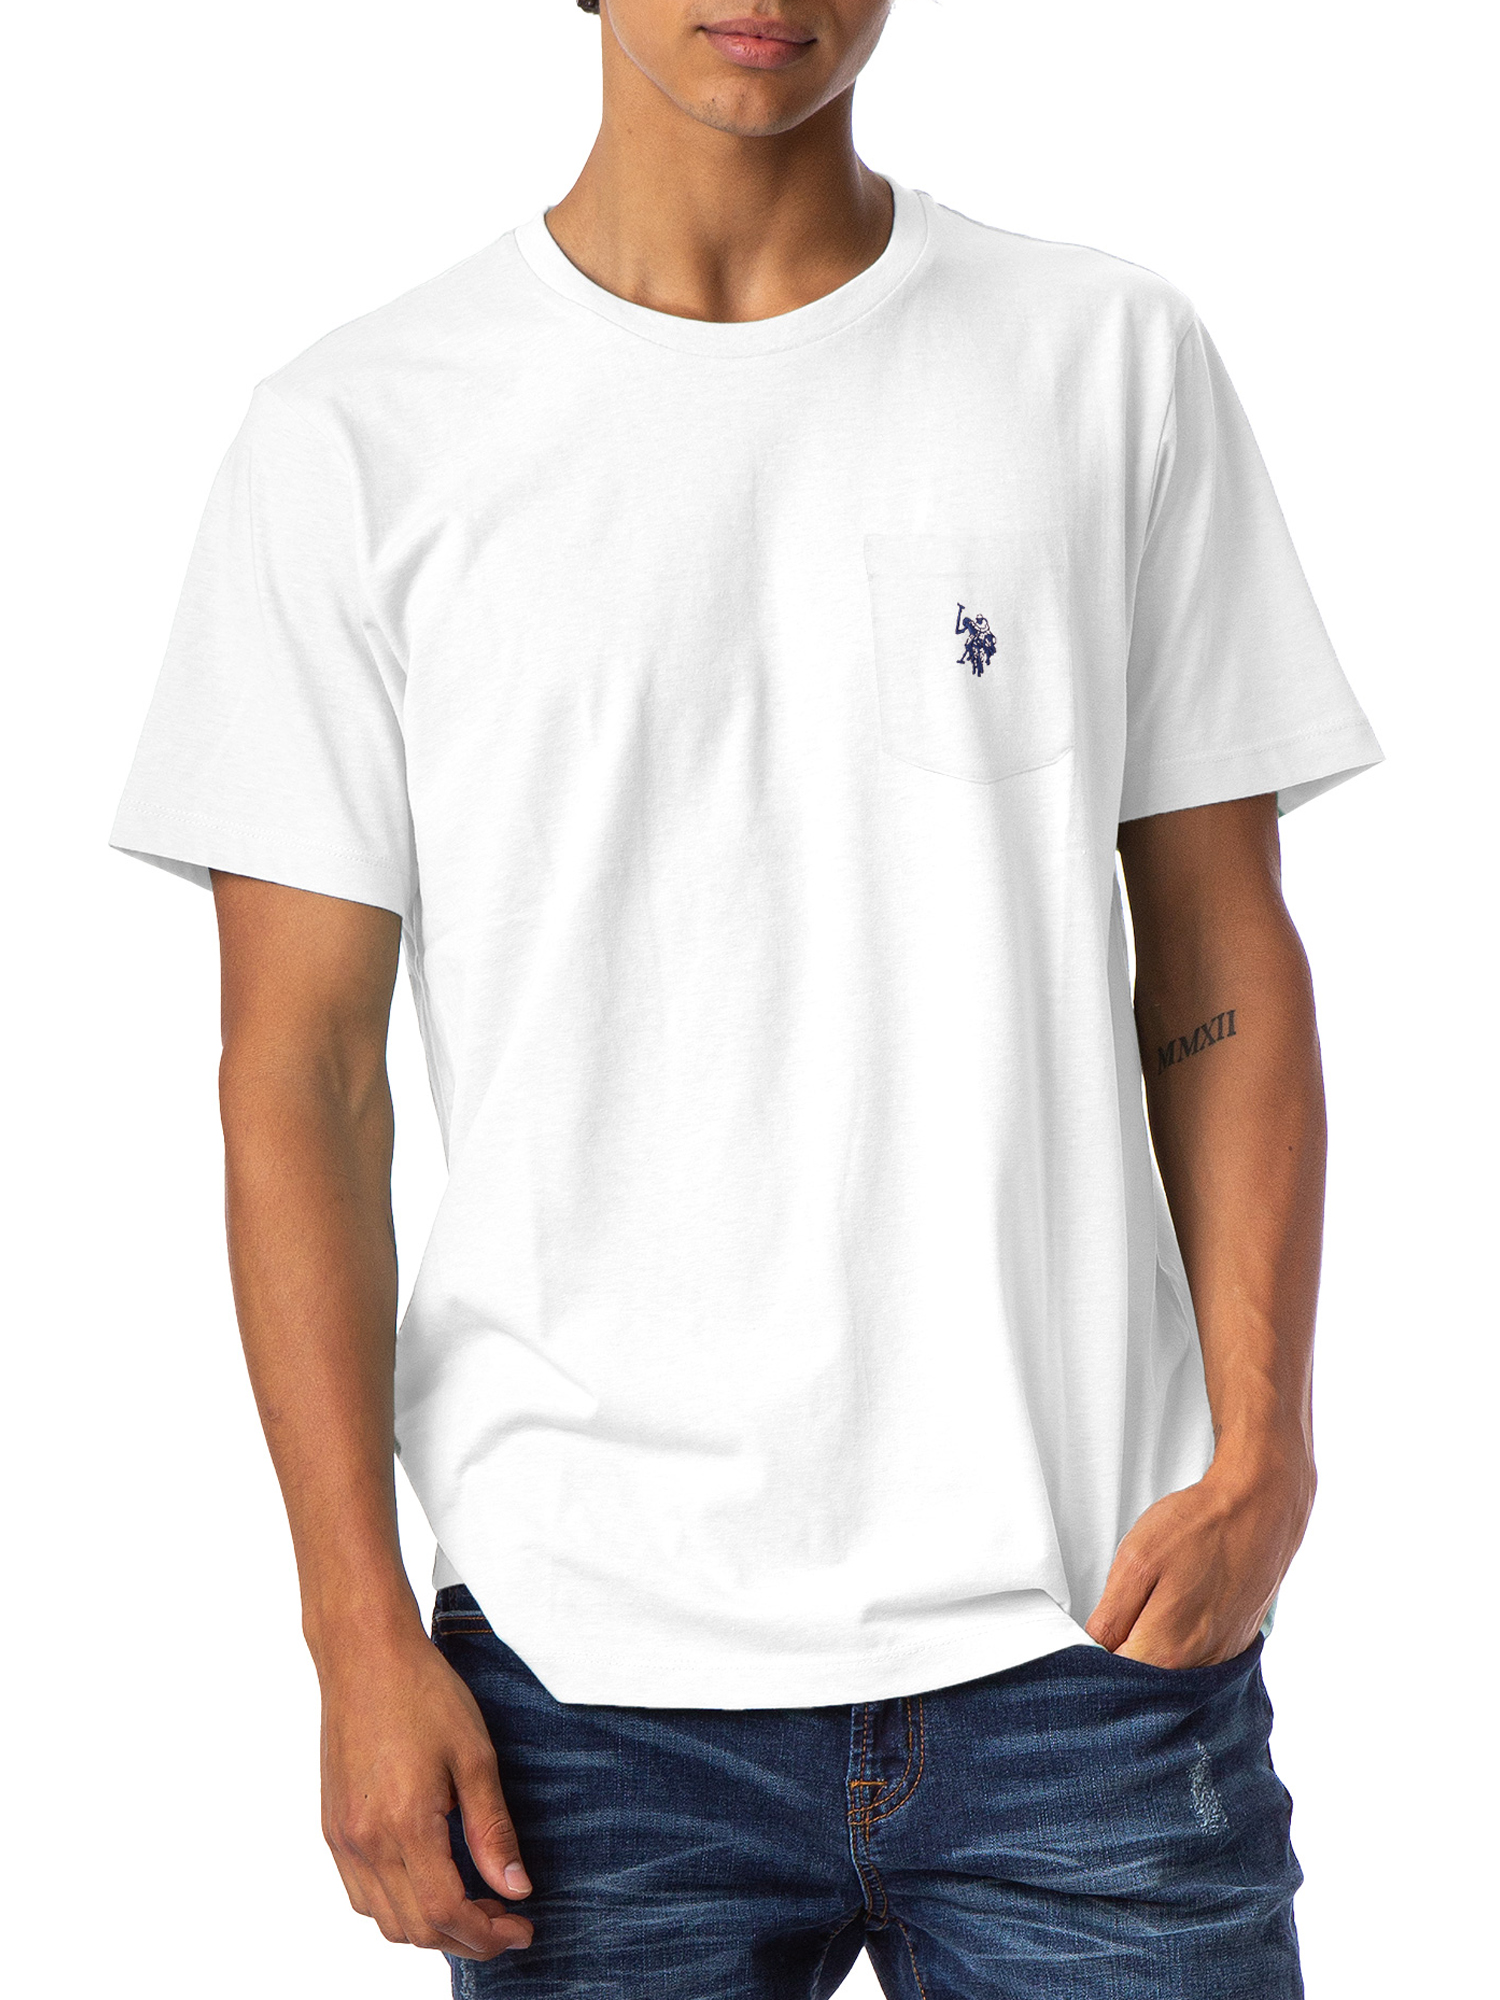 U.S. Polo Assn. Men's Pocket Knit T-Shirt - image 1 of 2